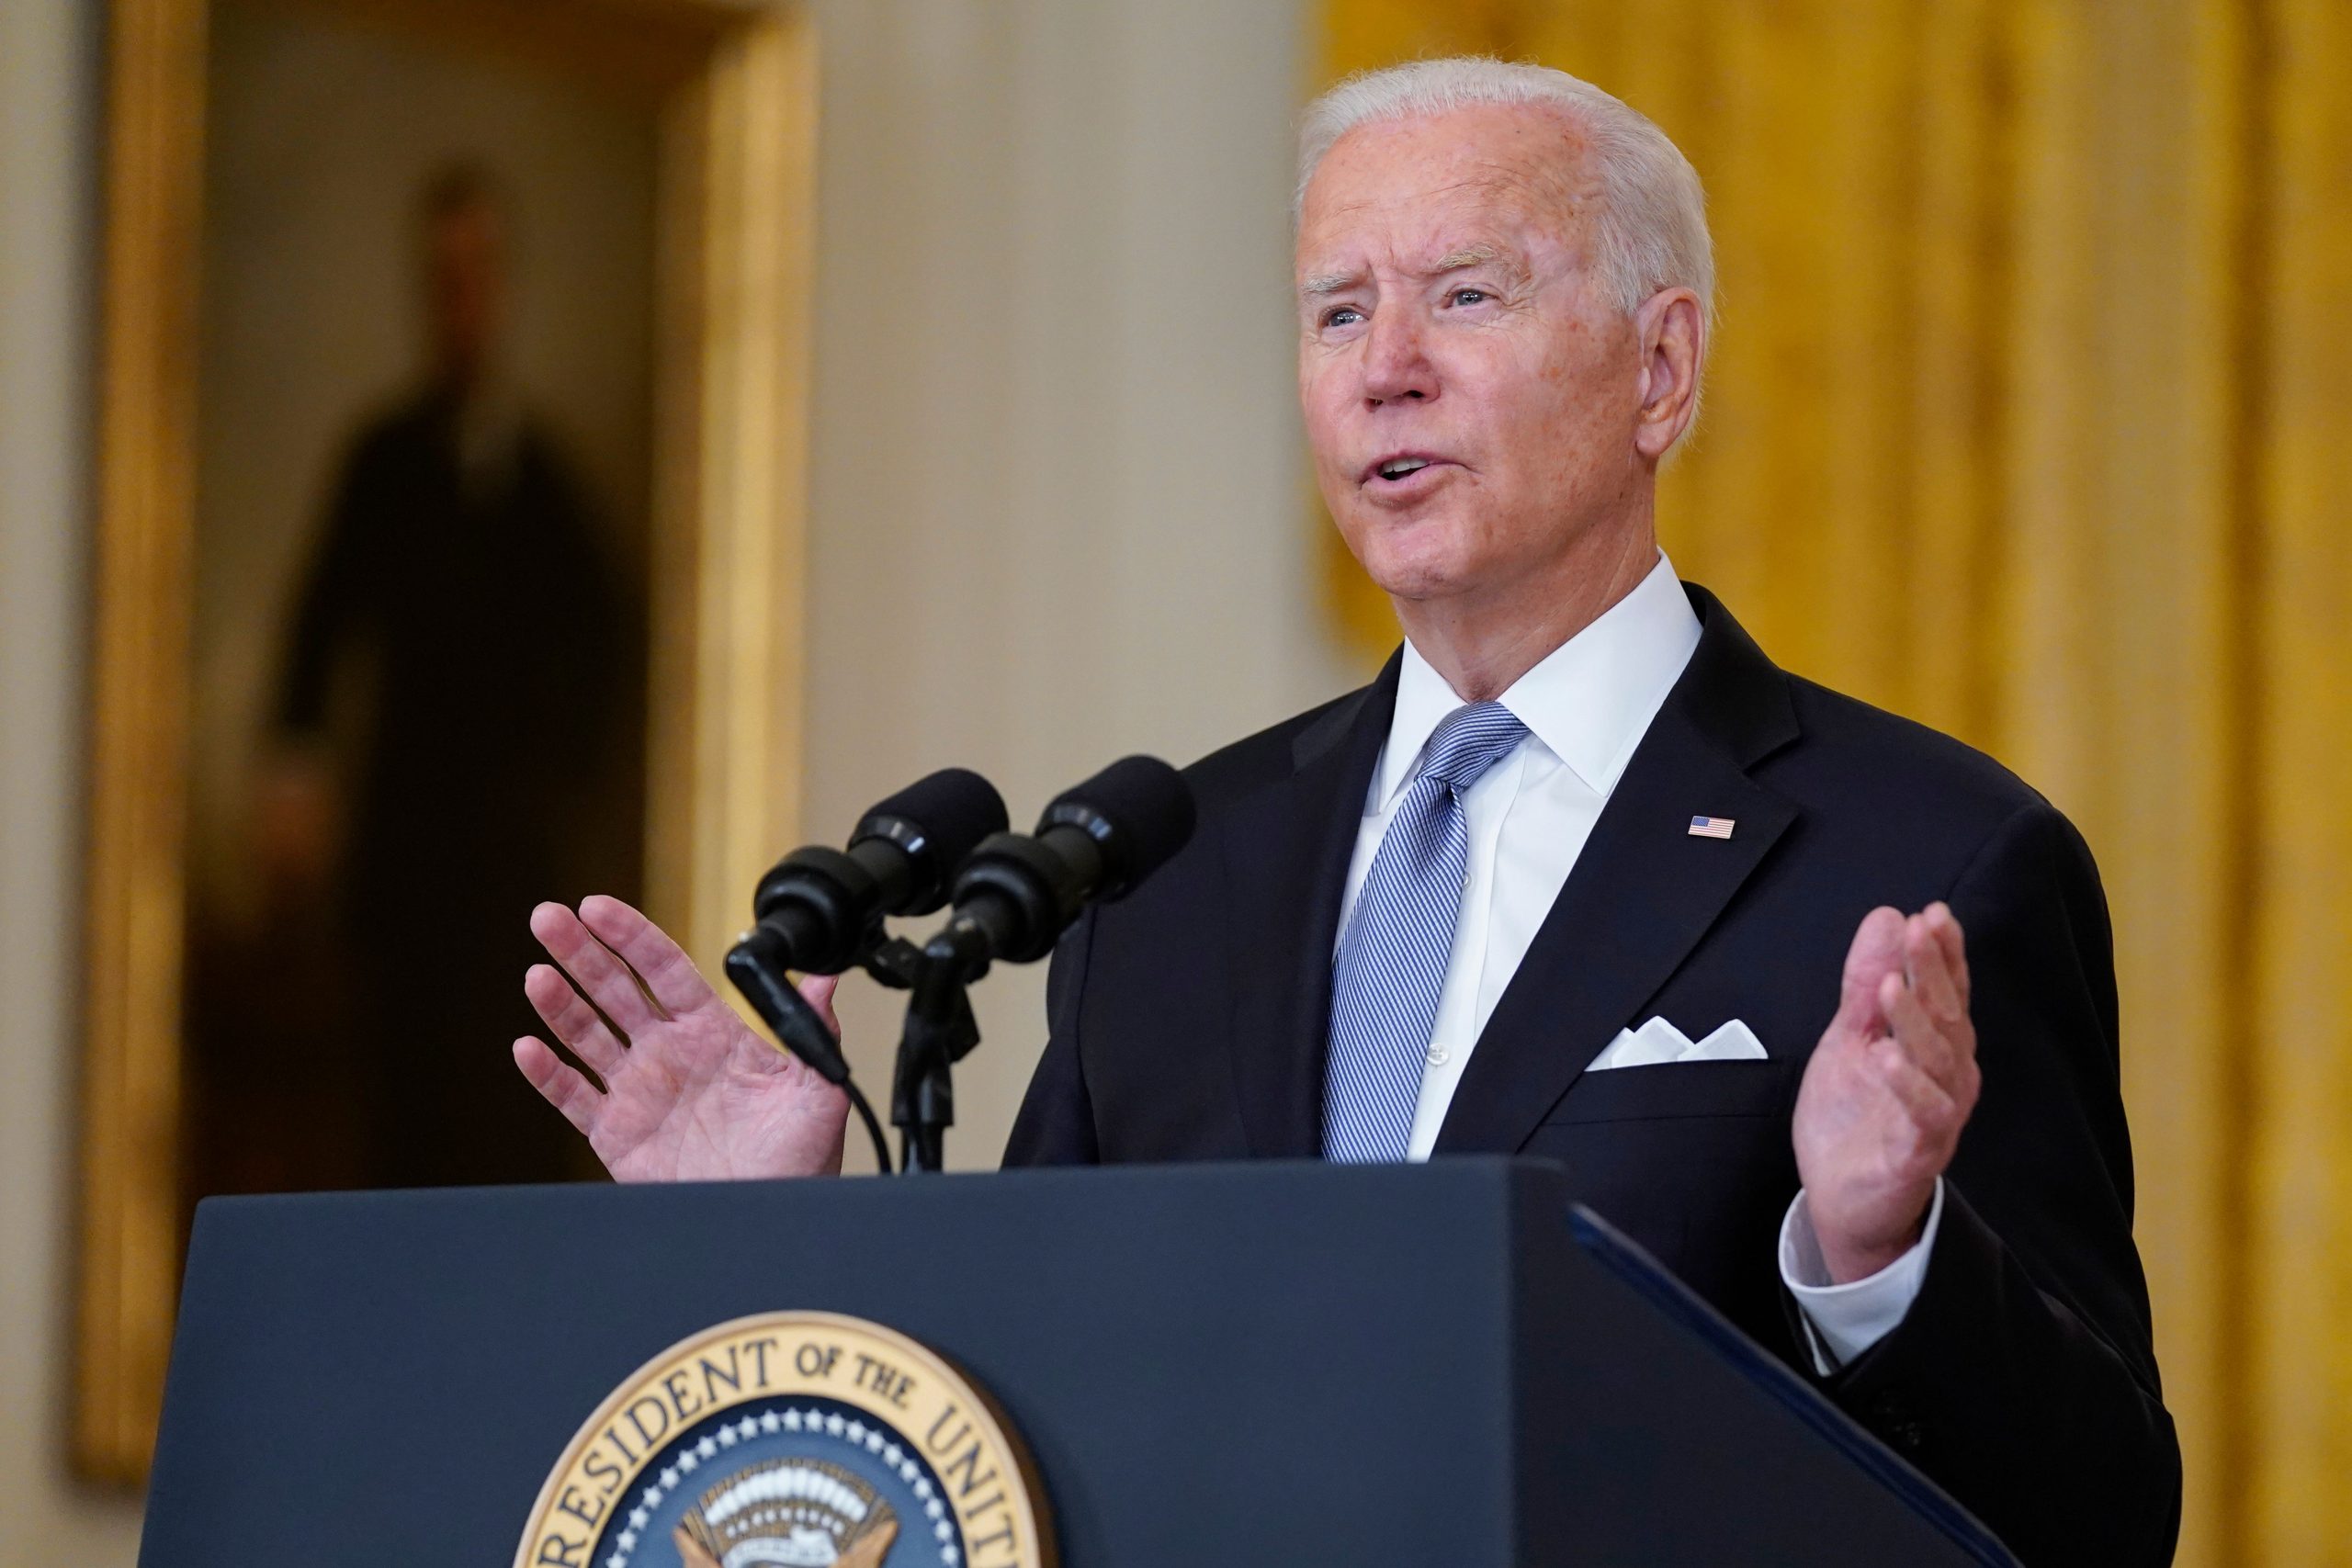 Texas abortion law: Joe Biden promises to protect women from ‘bizarre scheme’